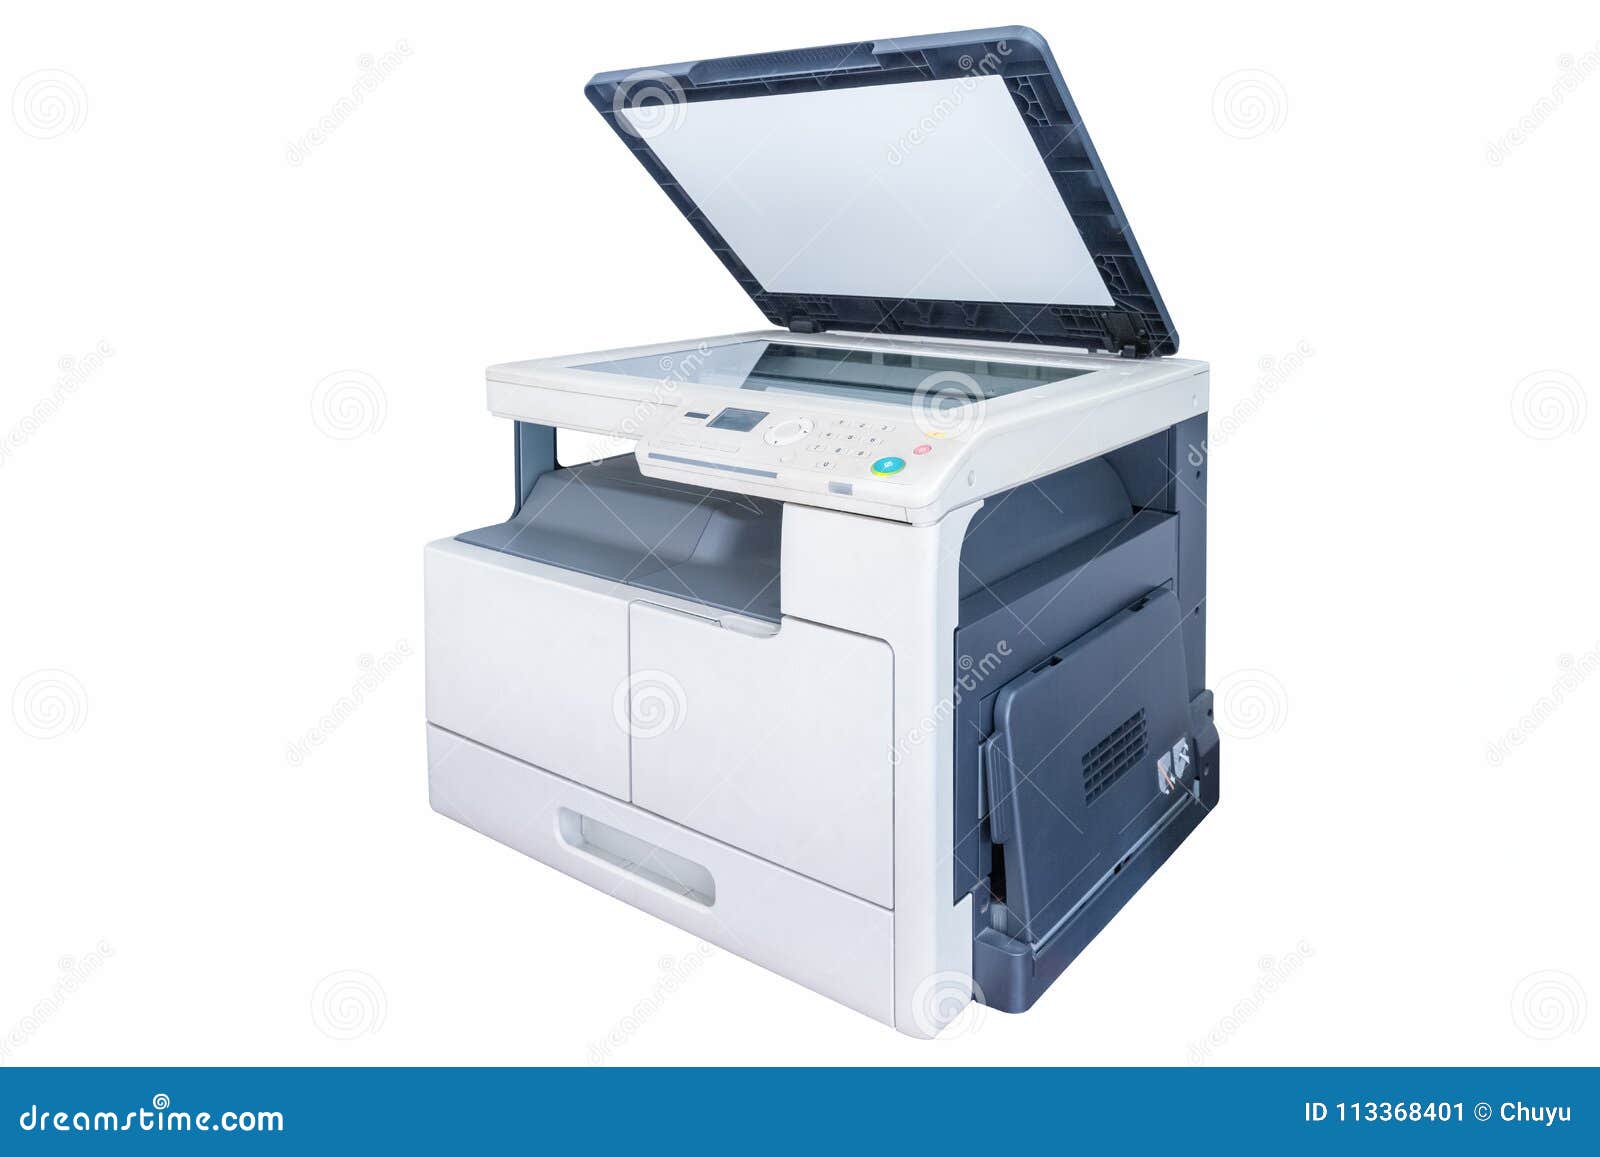 print copy machine 